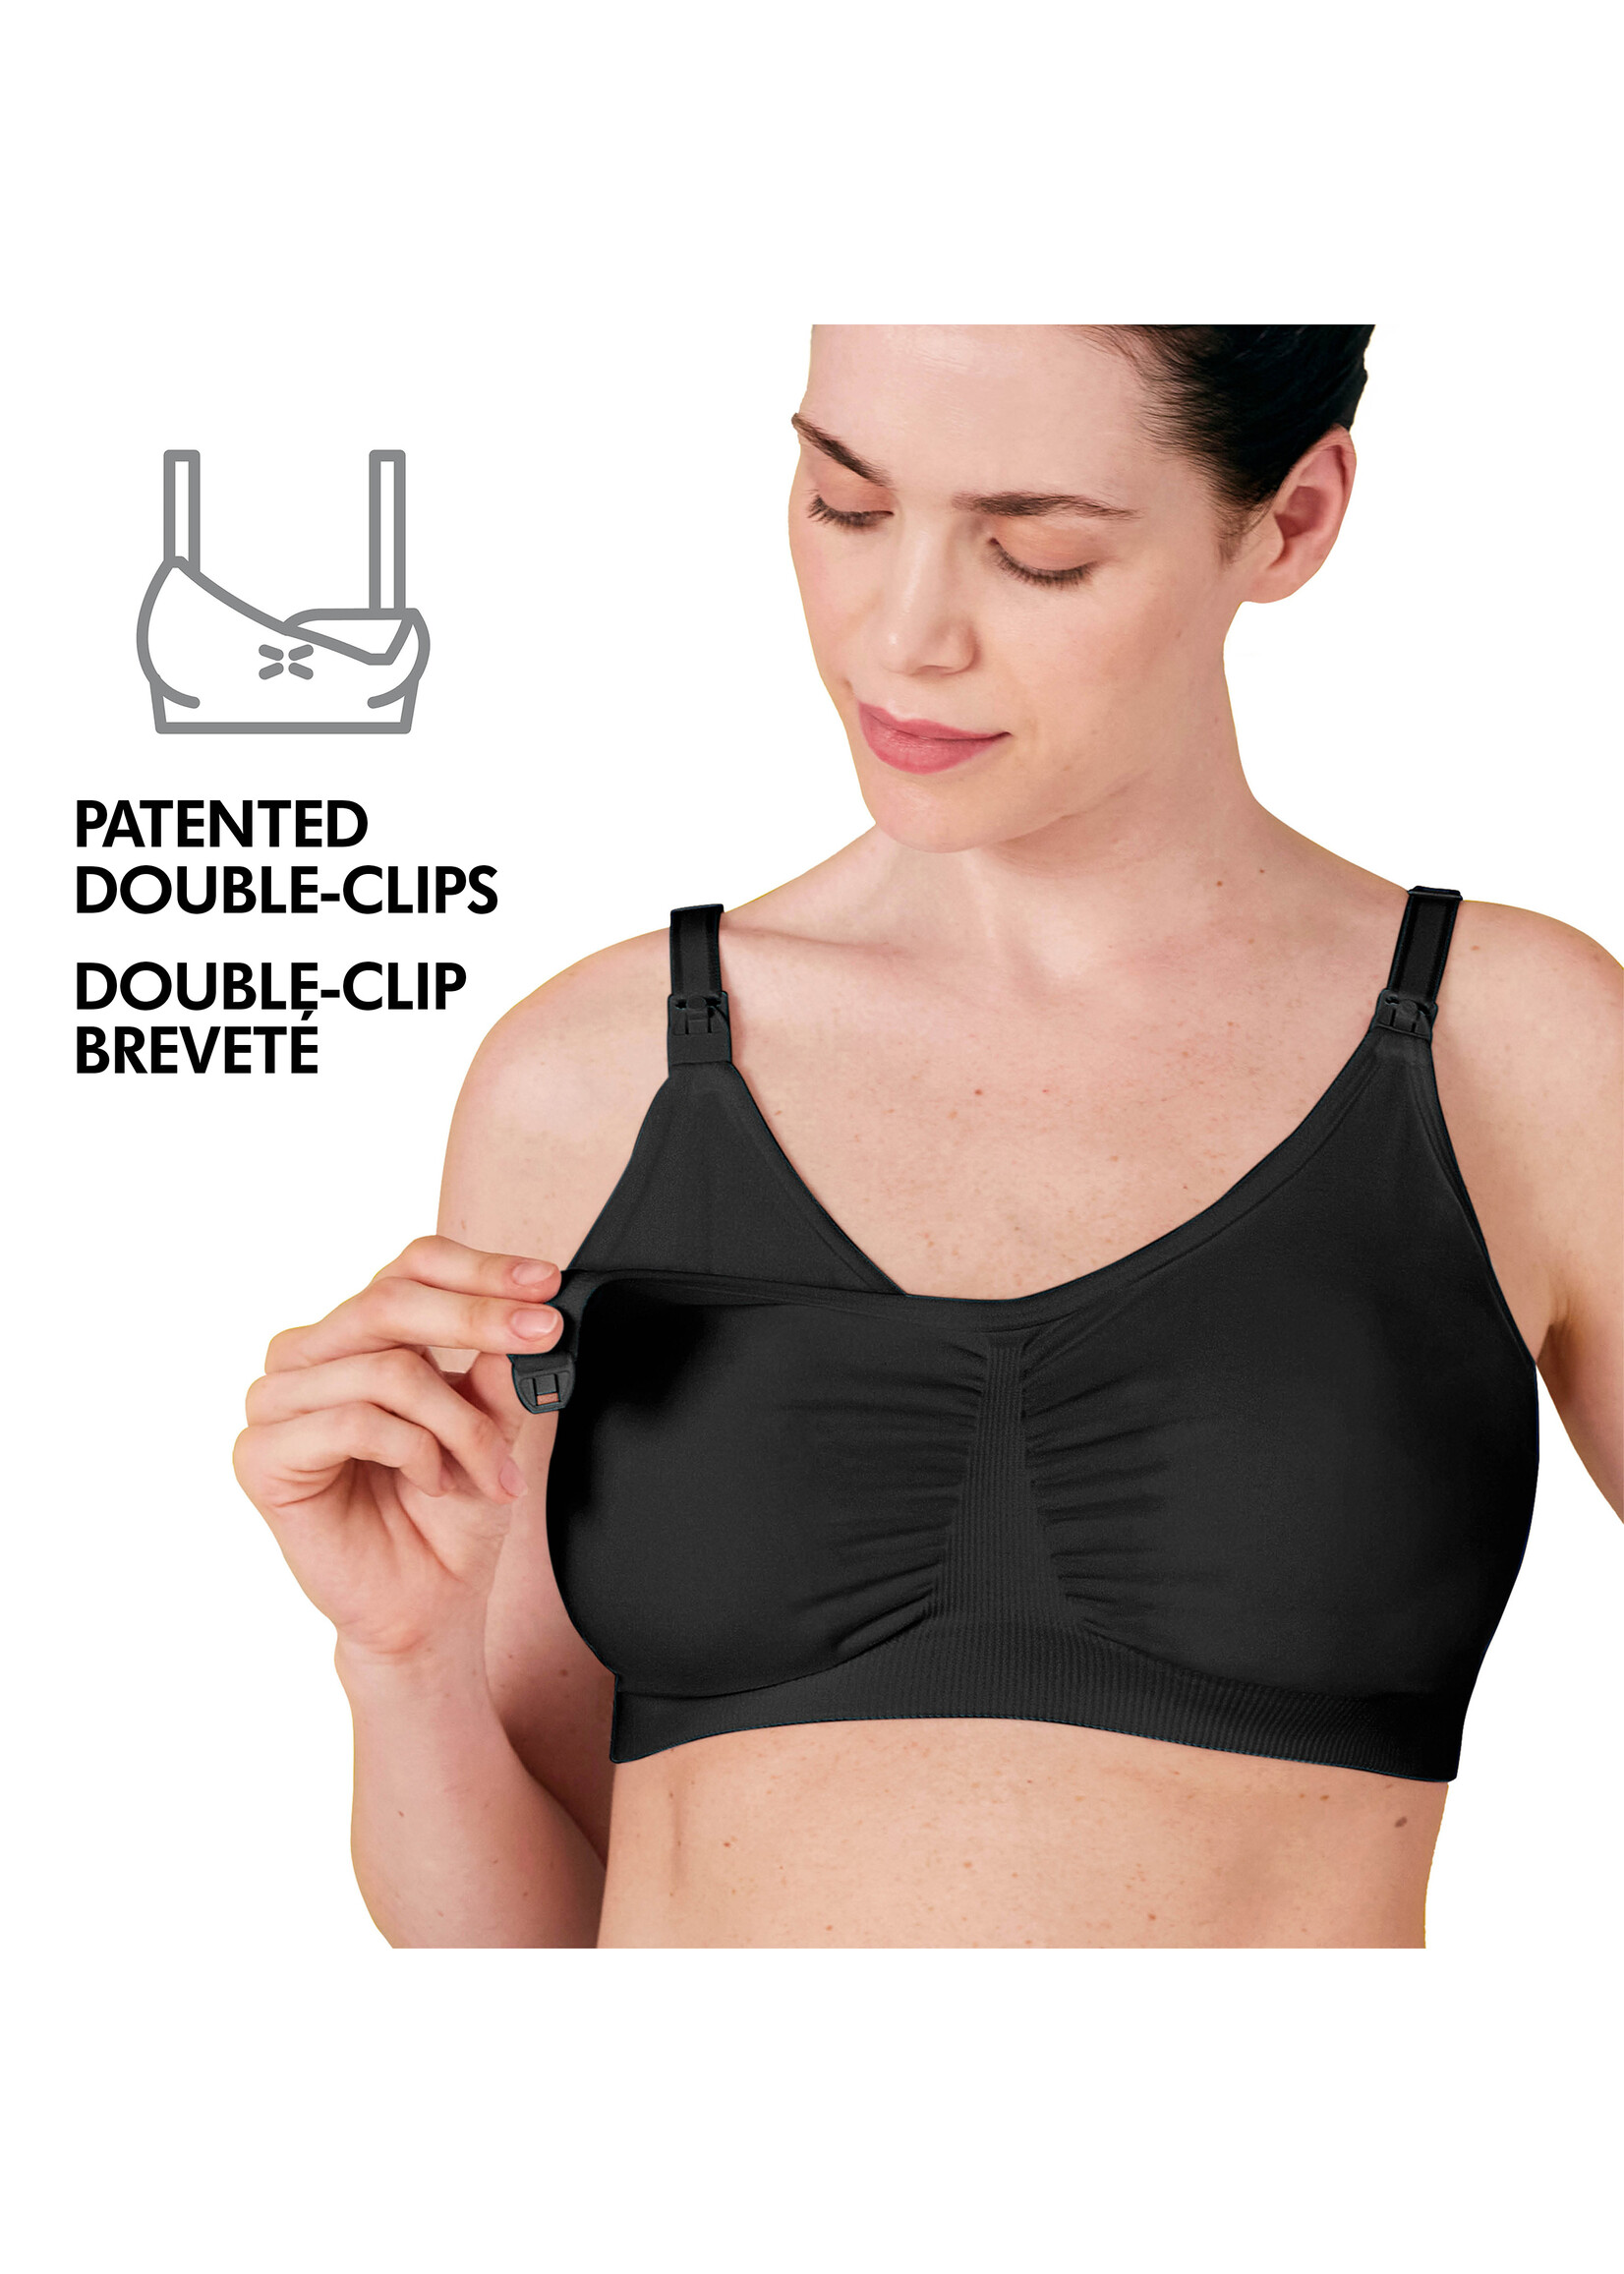 Medela breast bra, medela maternity bra for breast feeding woman